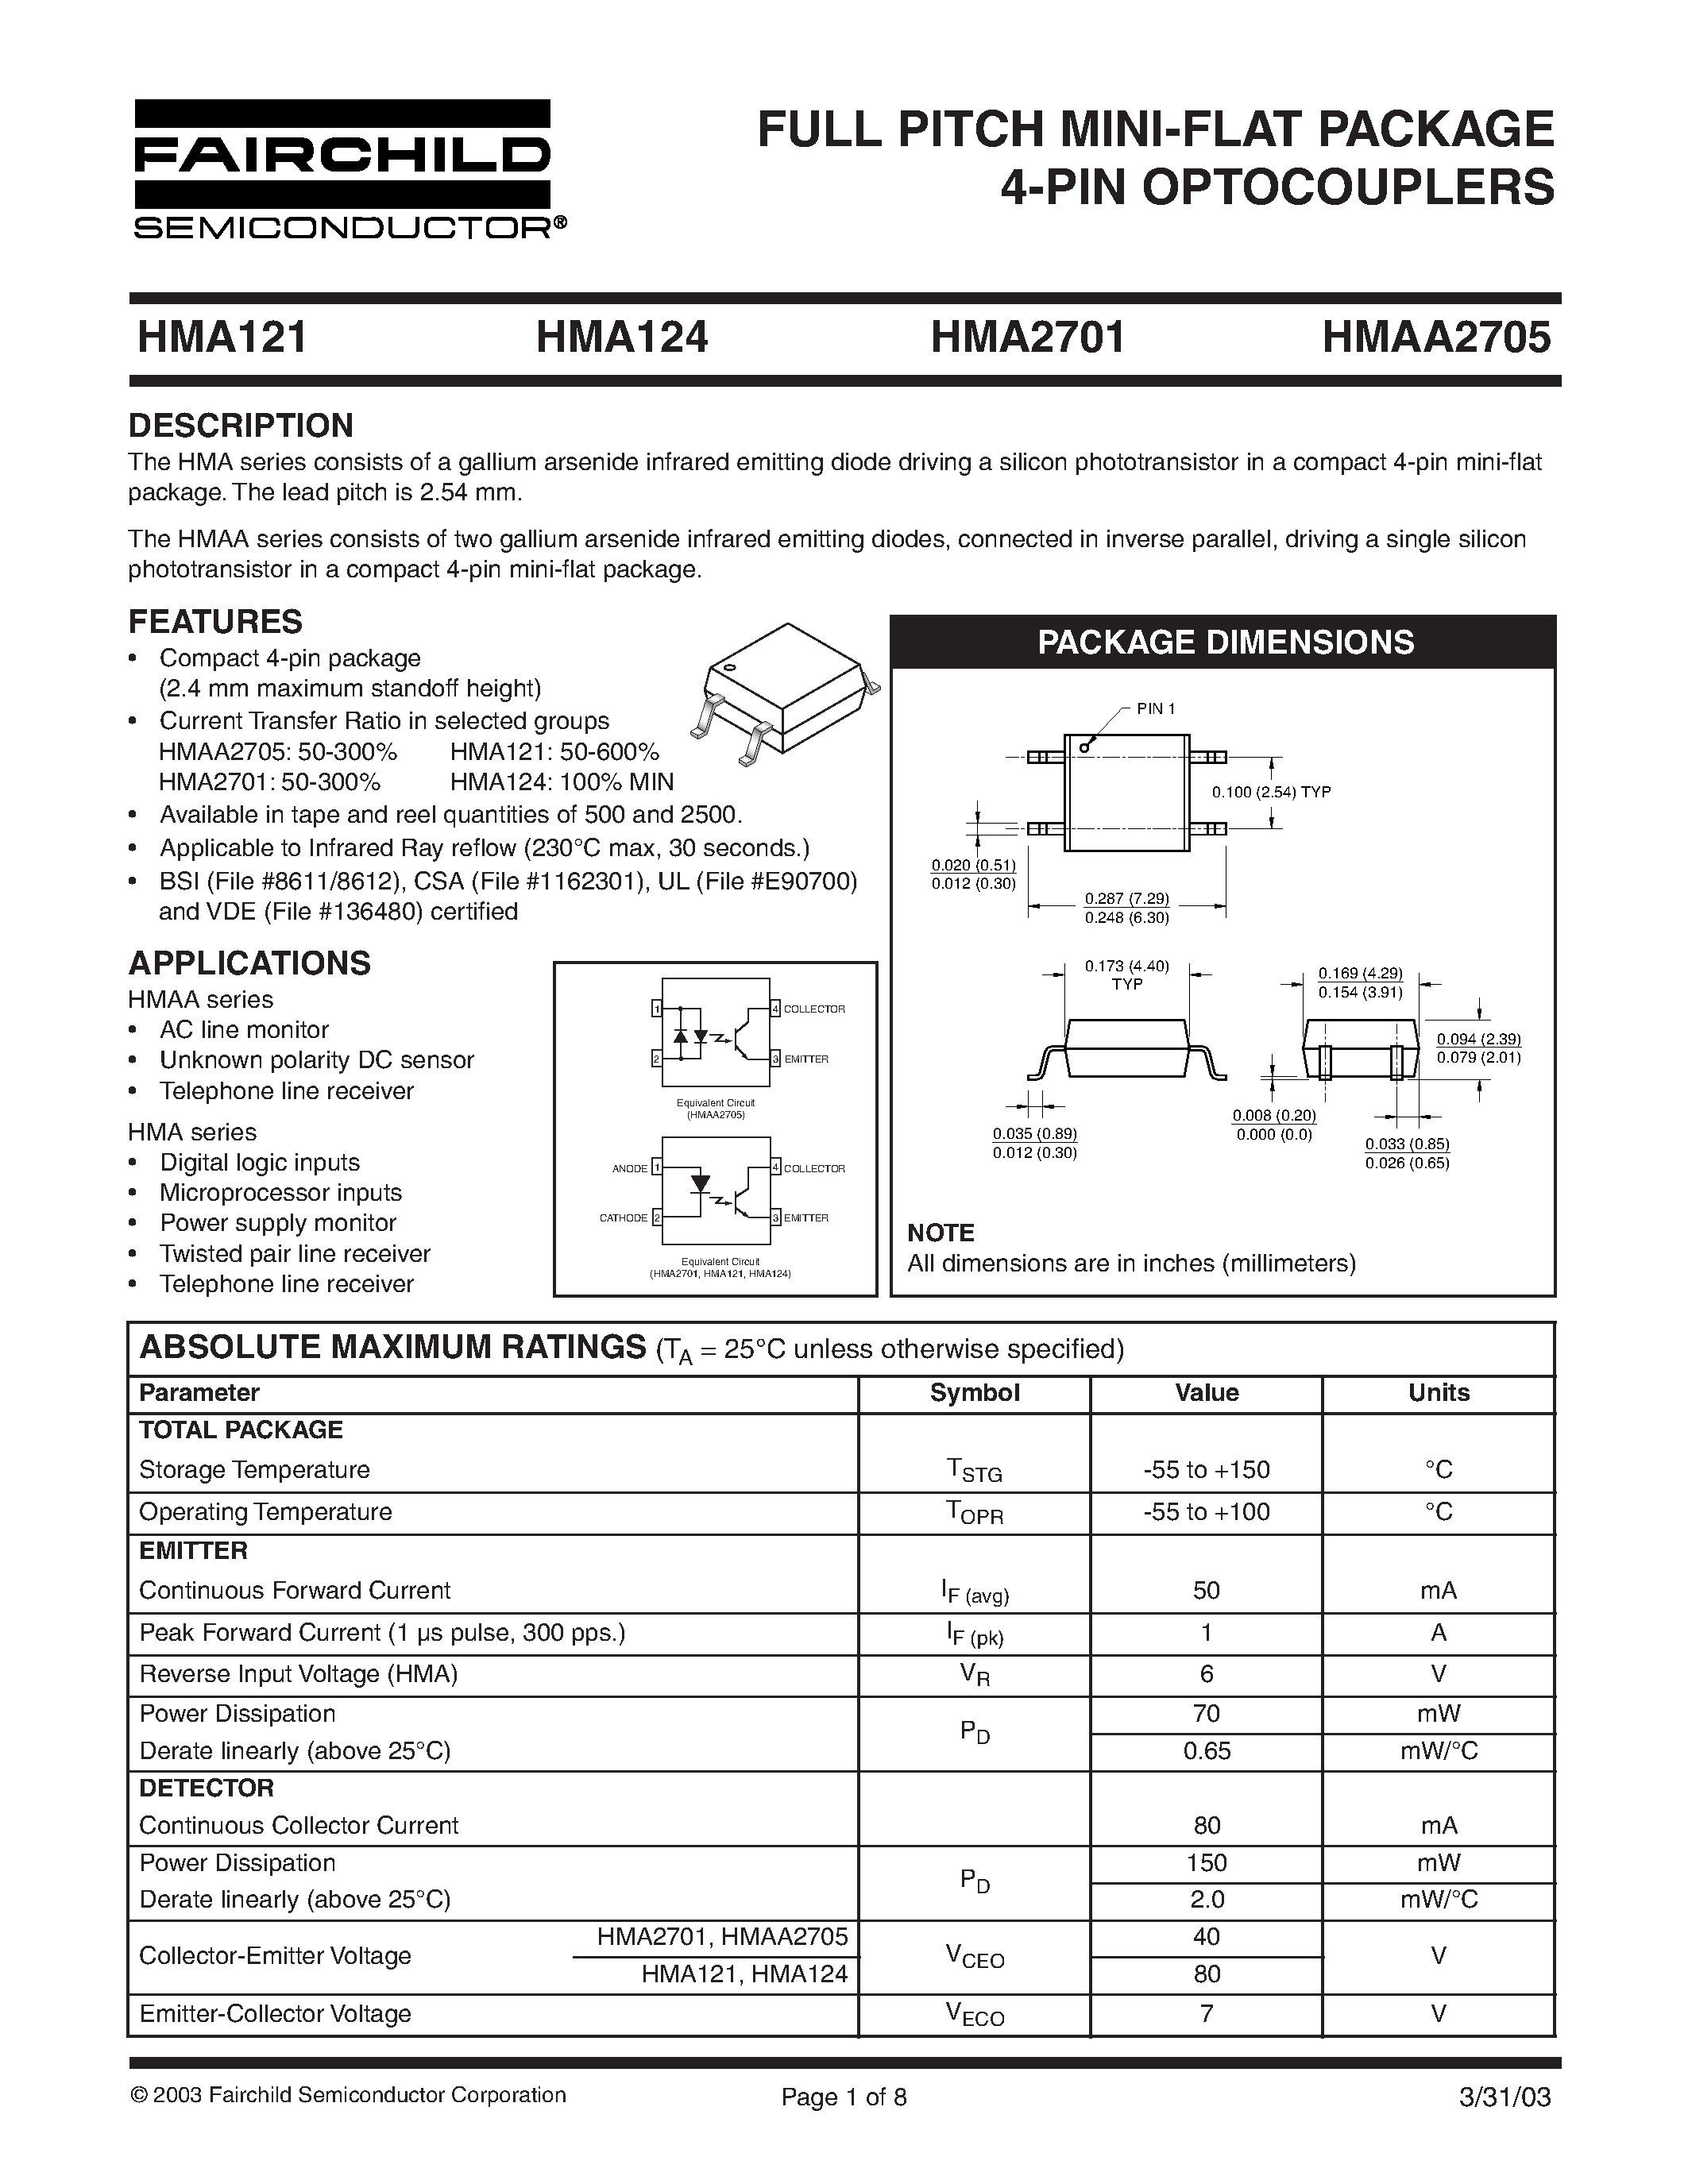 Datasheet HMAA2705 - FULL PITCH MINI-FLAT PACKAGE 4-PIN OPTOCOUPLERS page 1